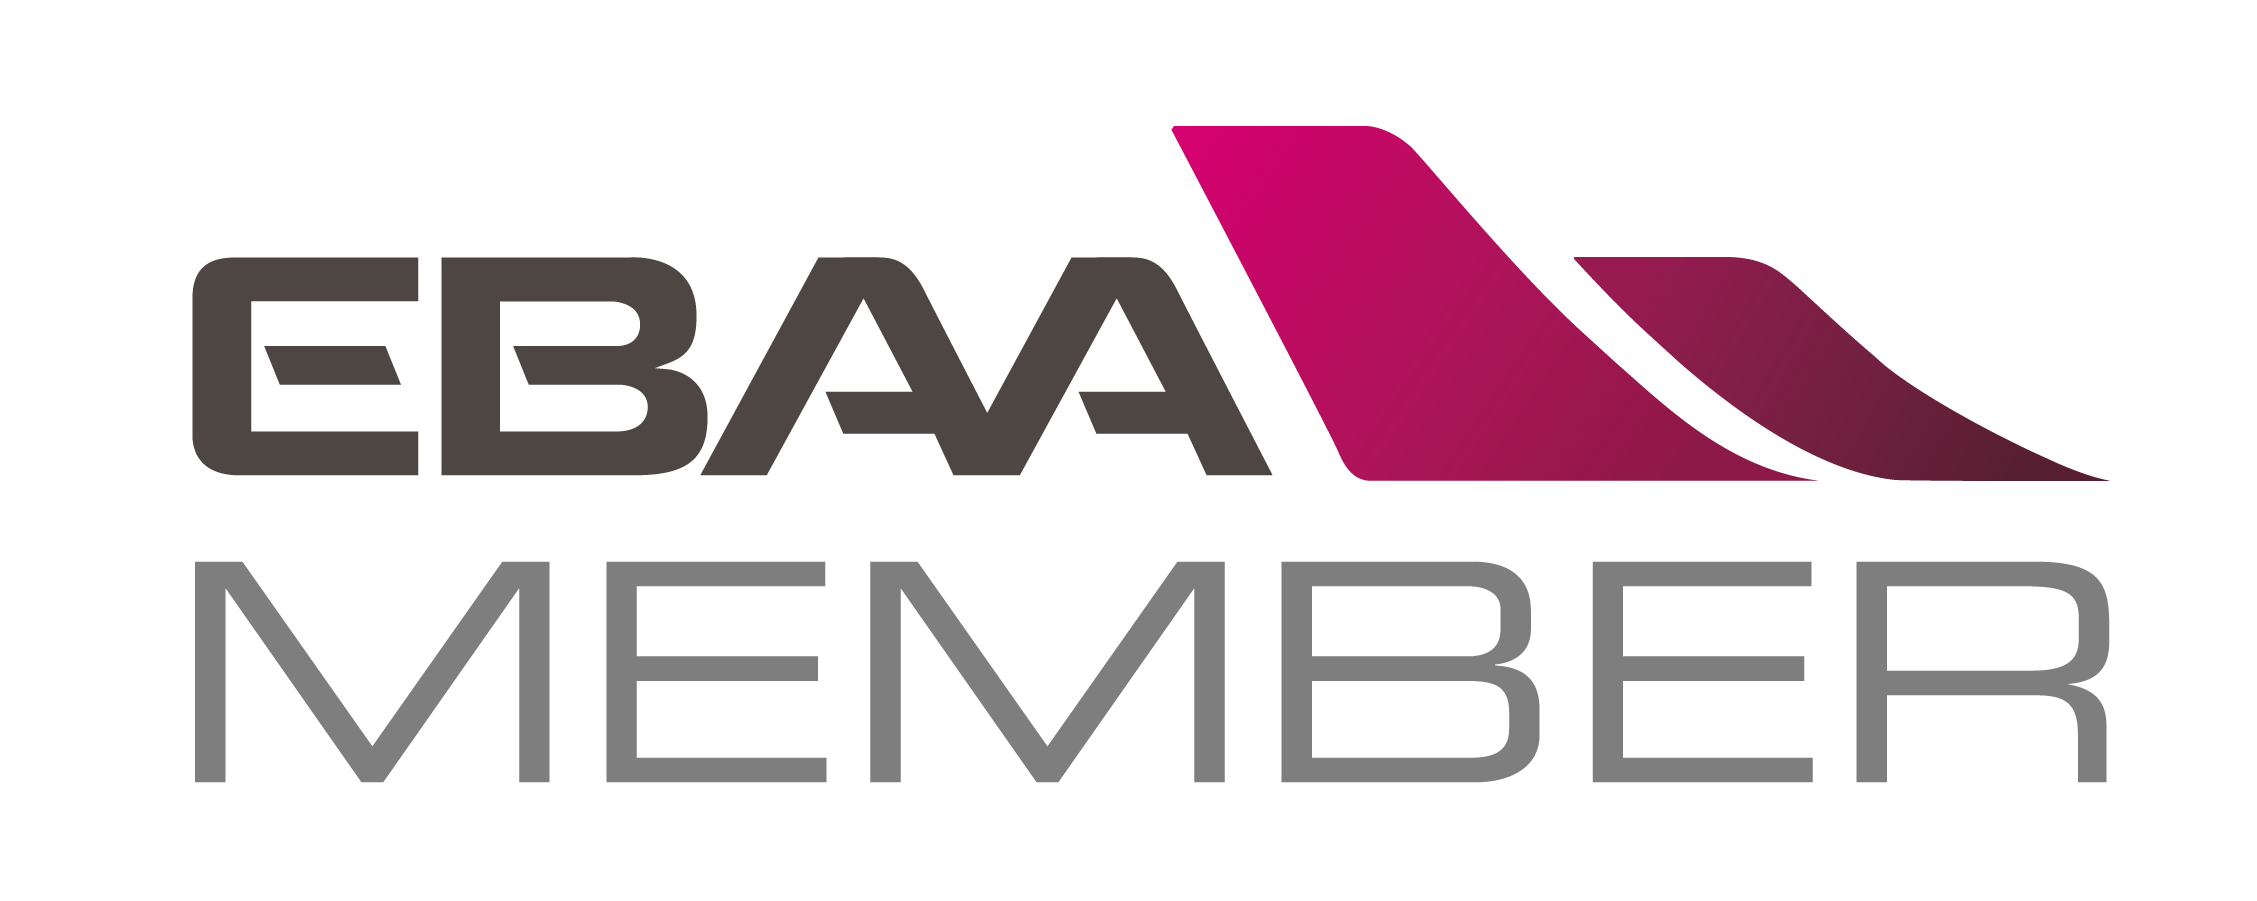 EBAA-Members-logo-stacked (2)